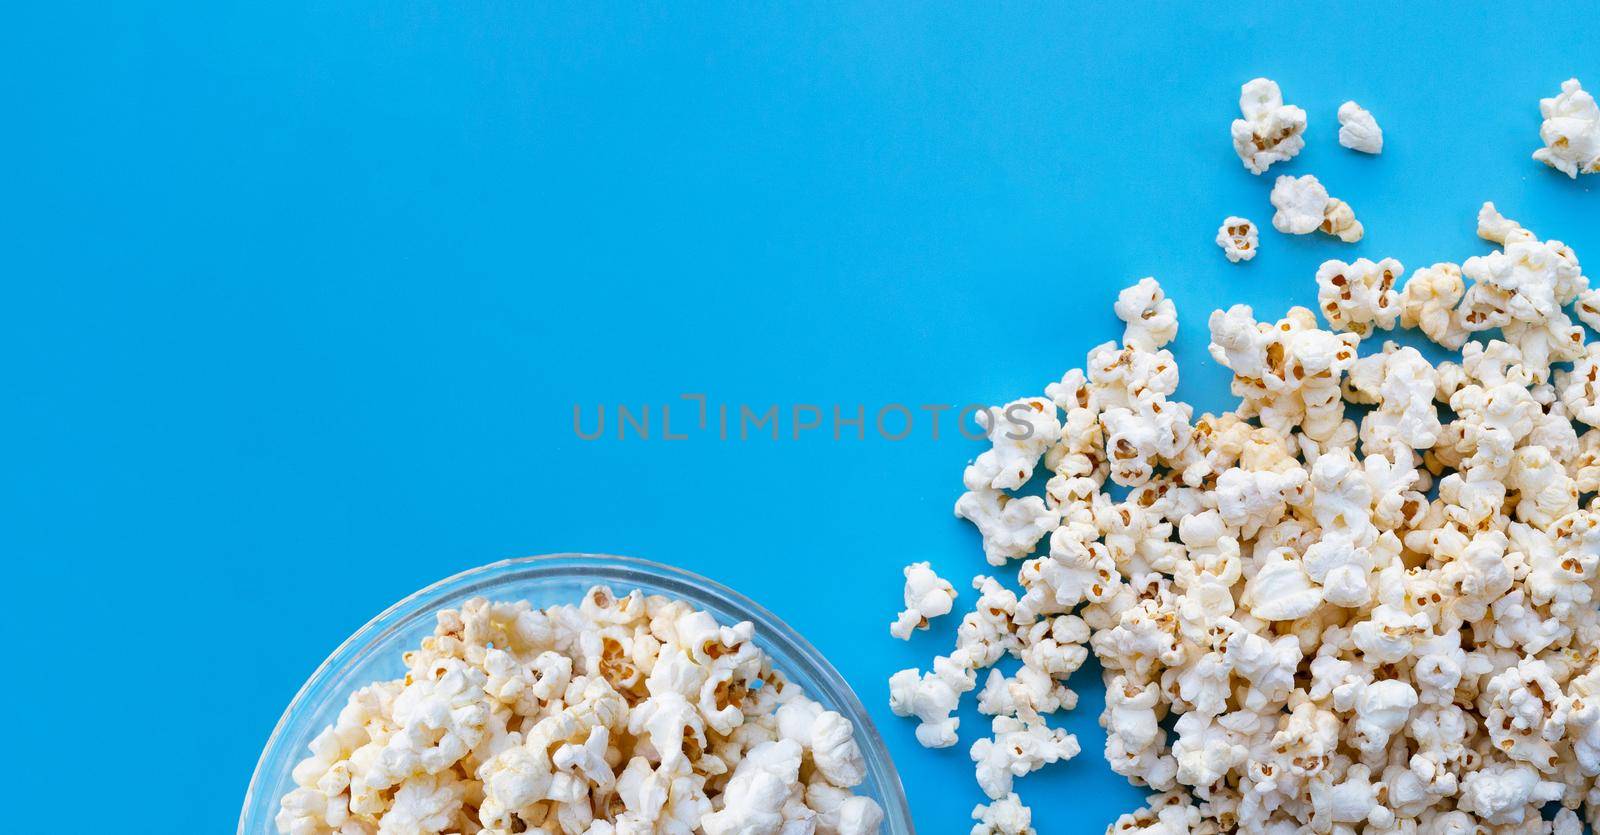 Popcorn on blue background. Copy space by Bowonpat